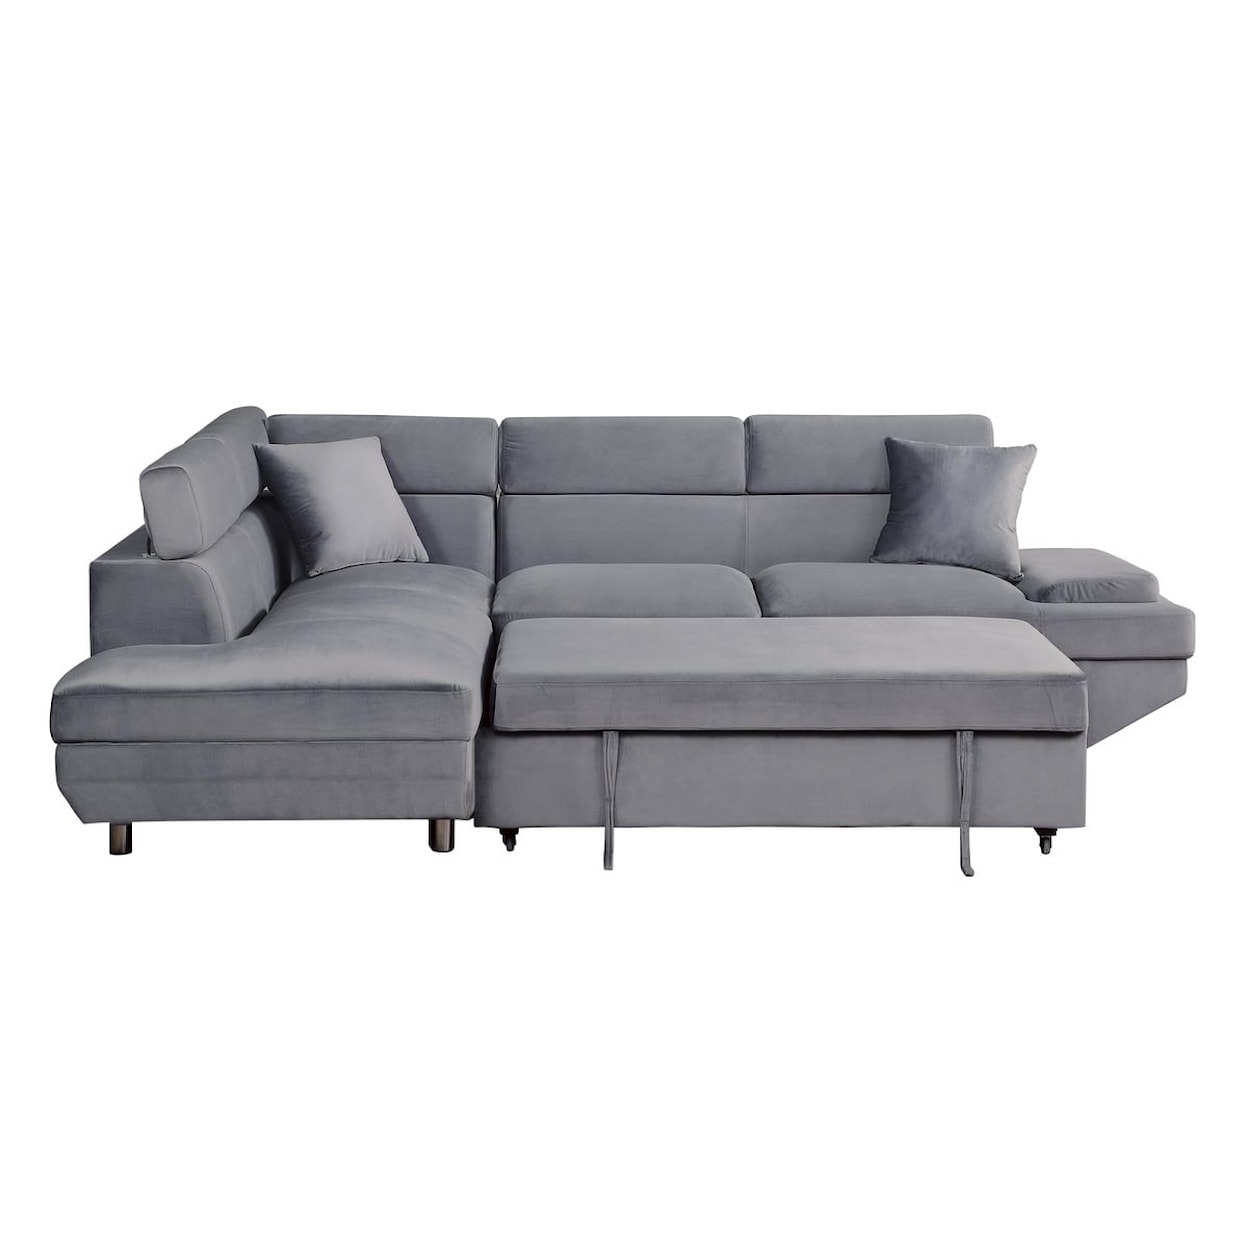 Homelegance Furniture Cruz 2-Piece Sectional Sofa